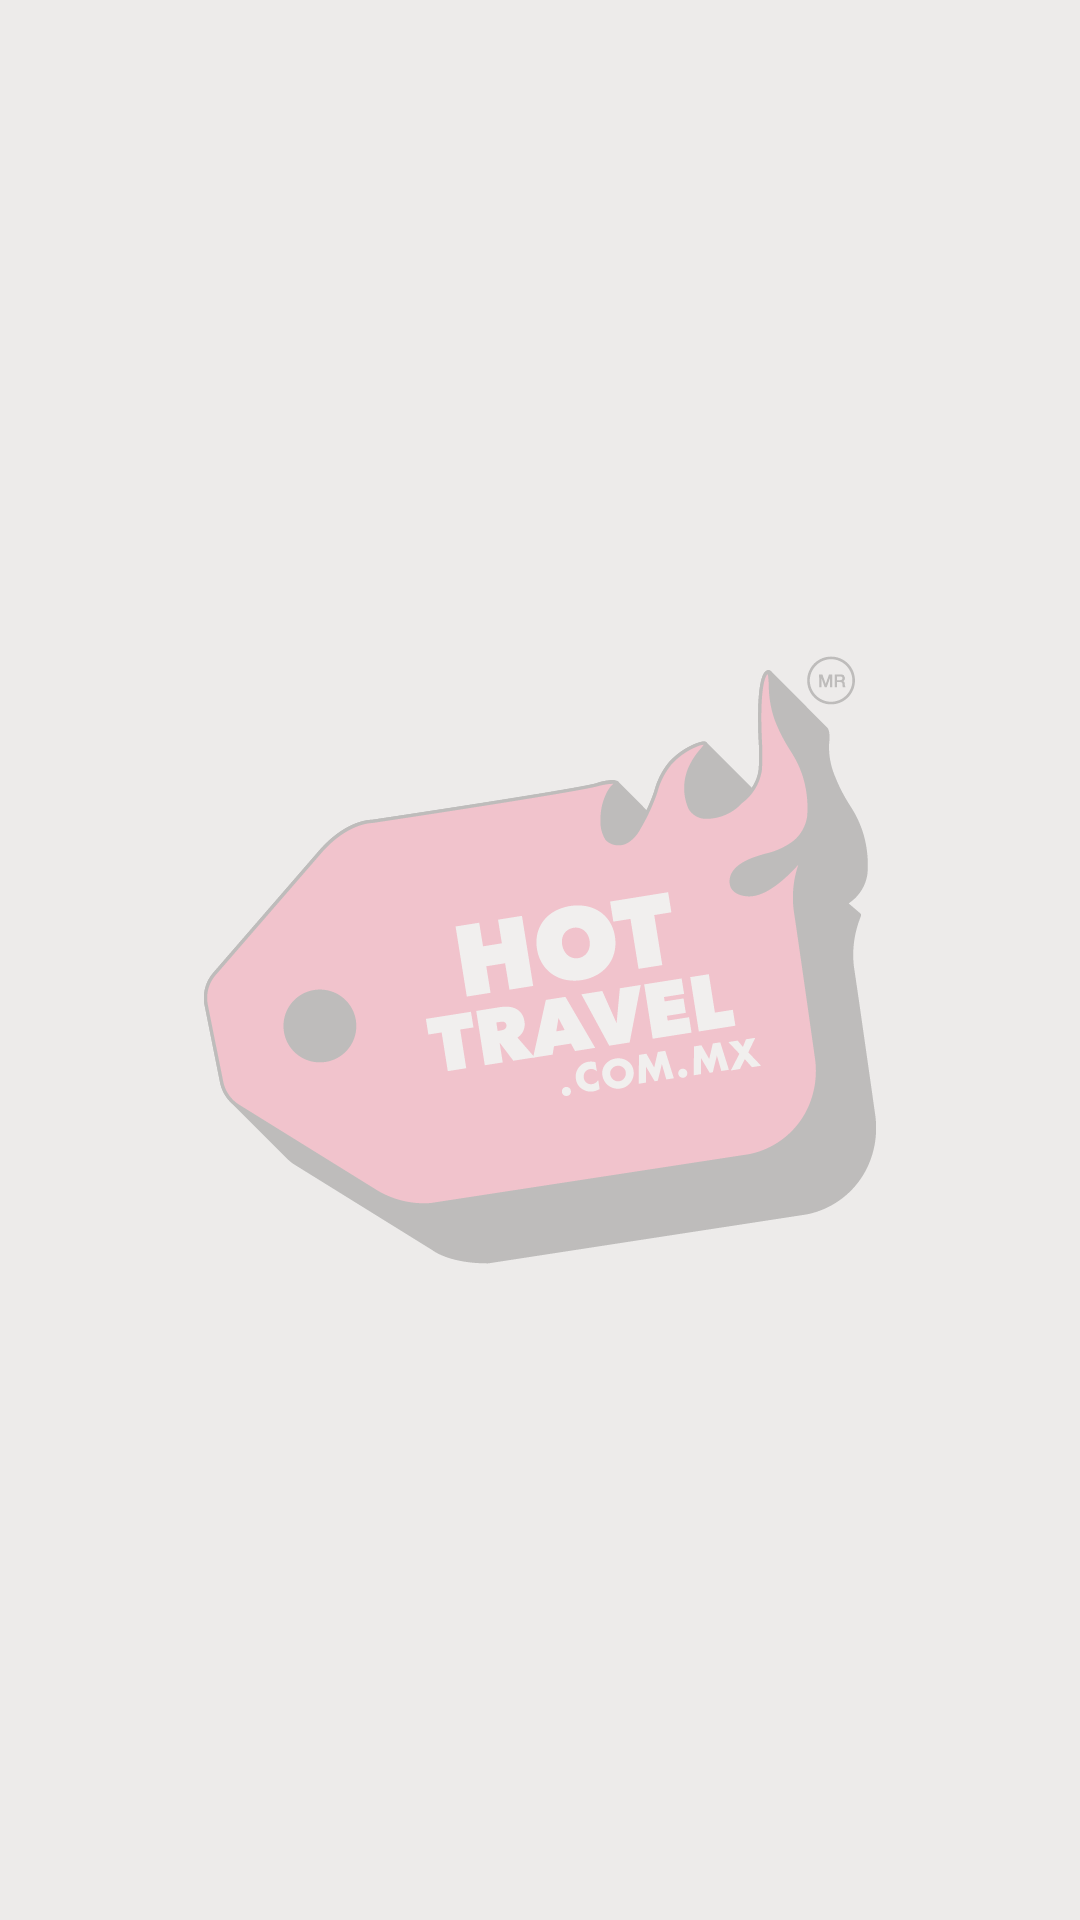 HOT TRAVEL Karisma Hotels & Resorts